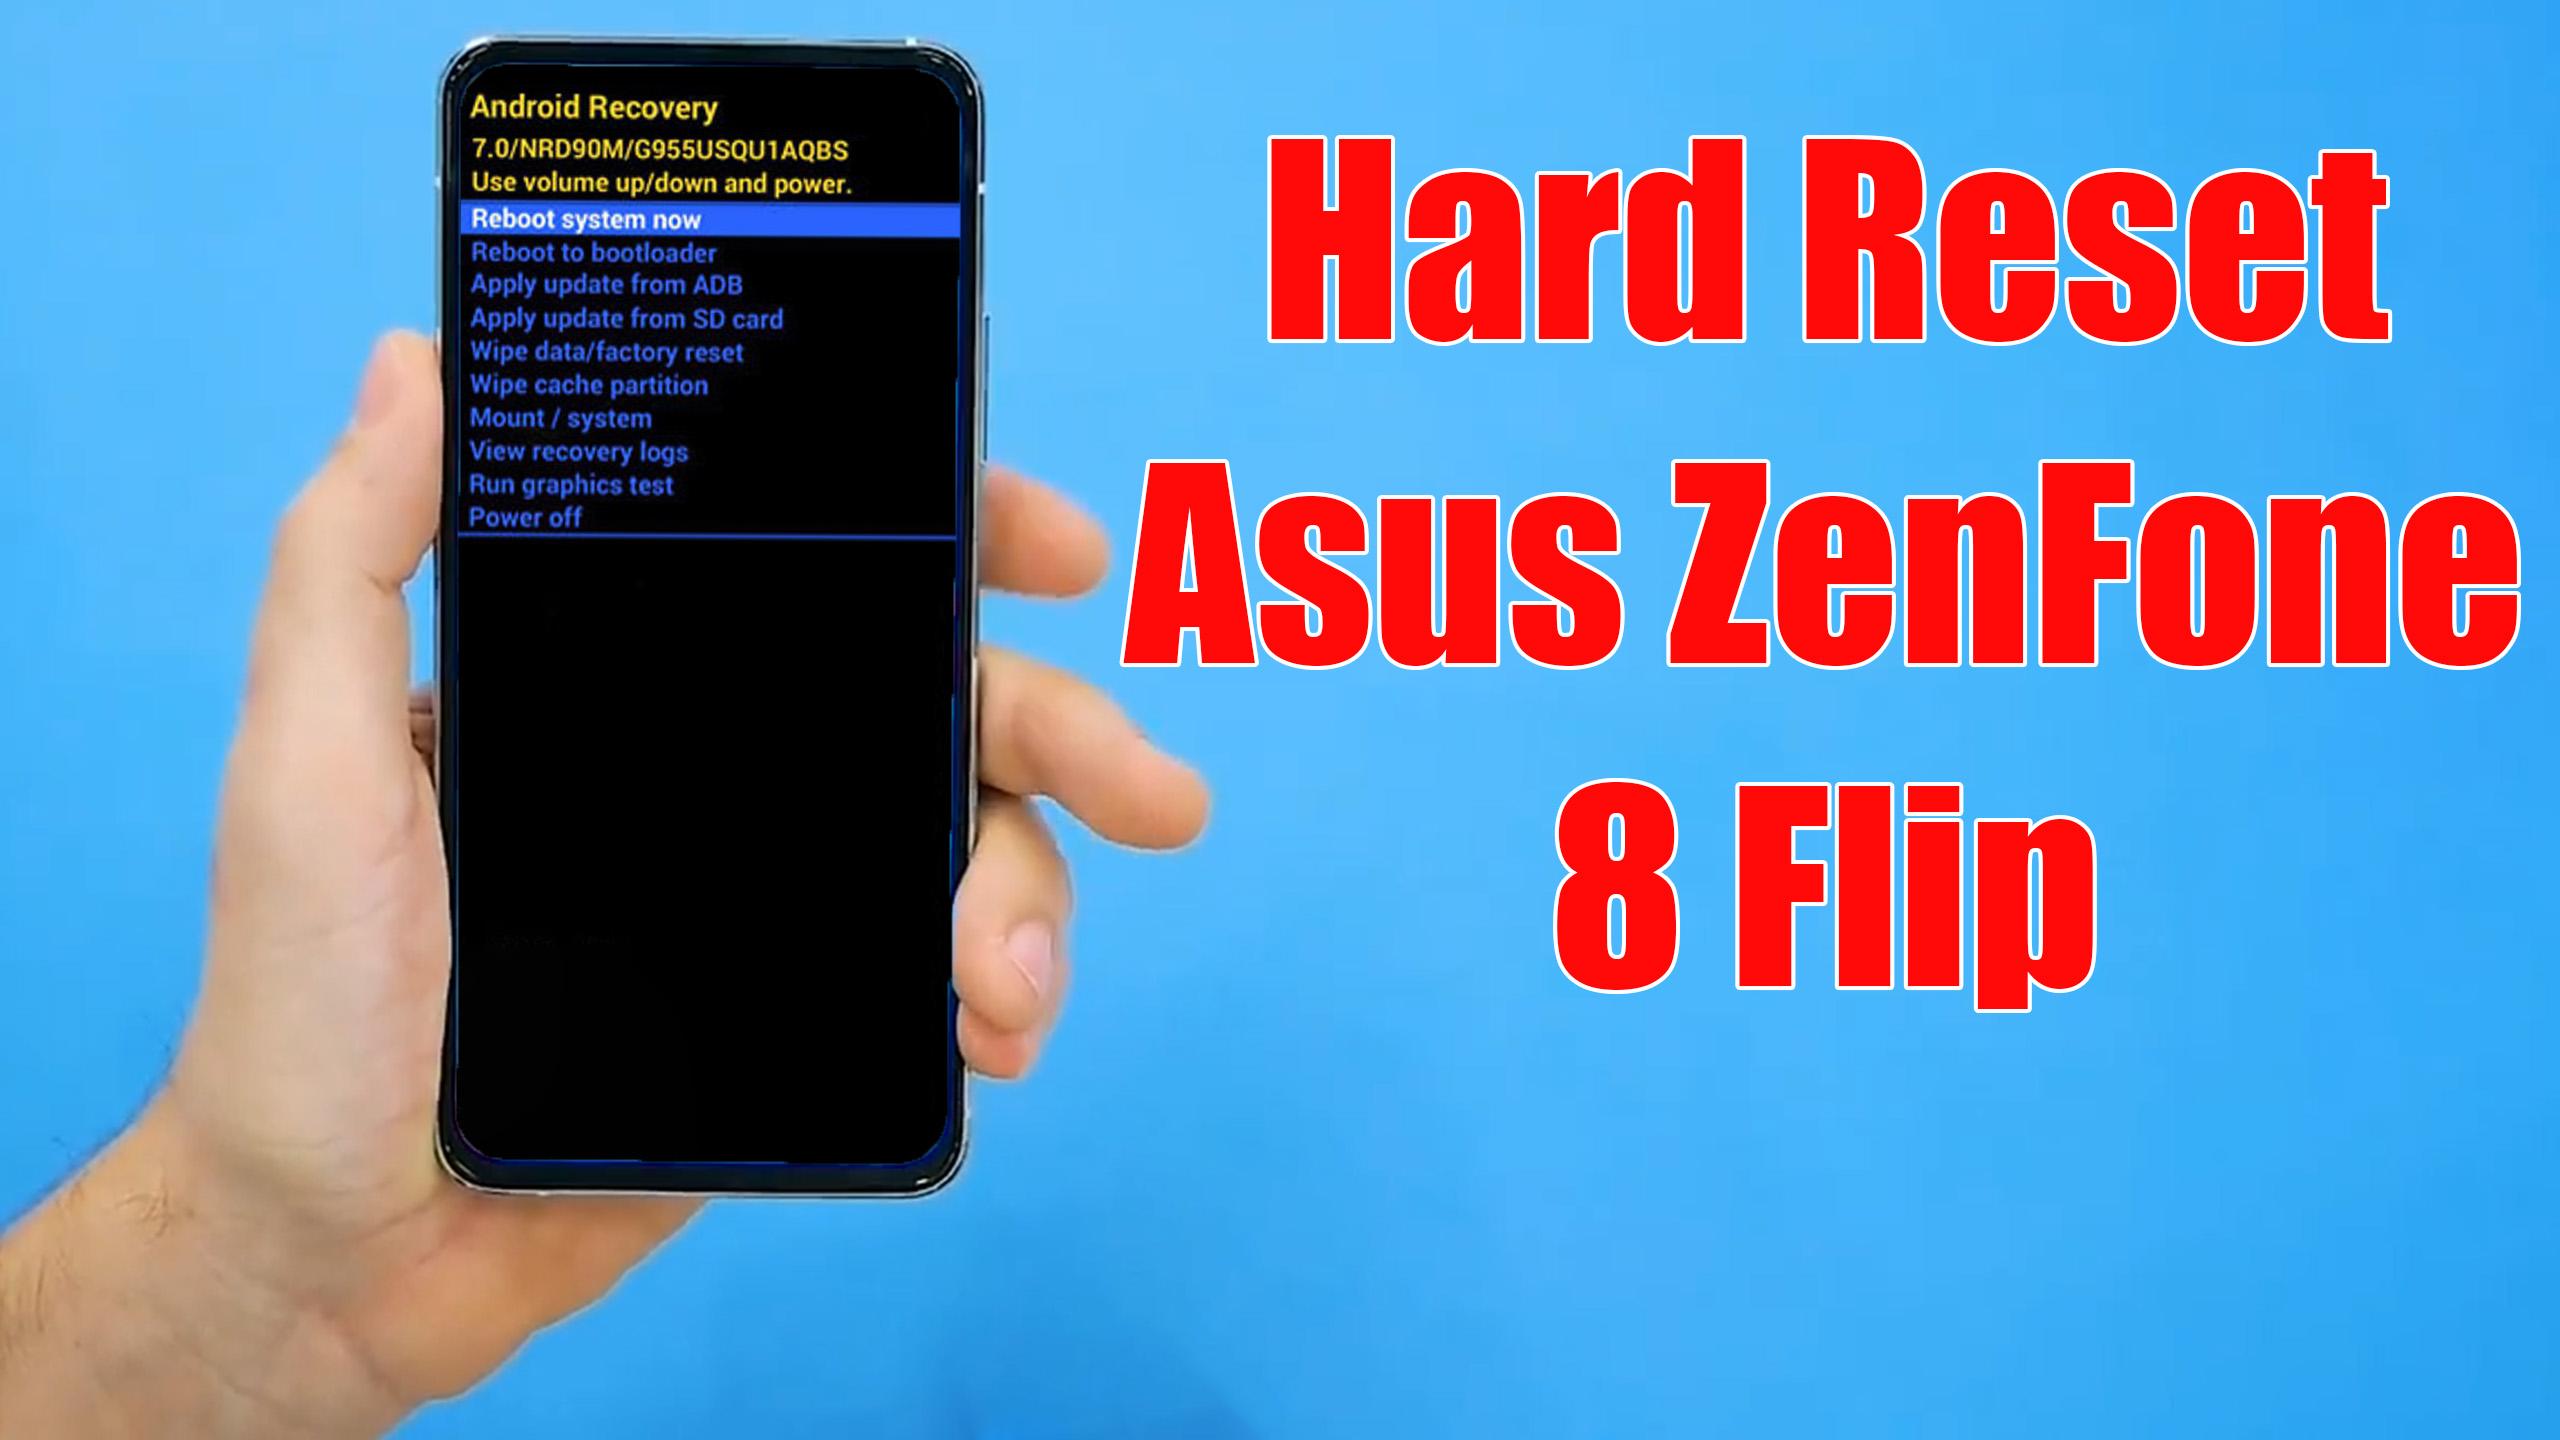 Asus Zenphone Rescue V100.0